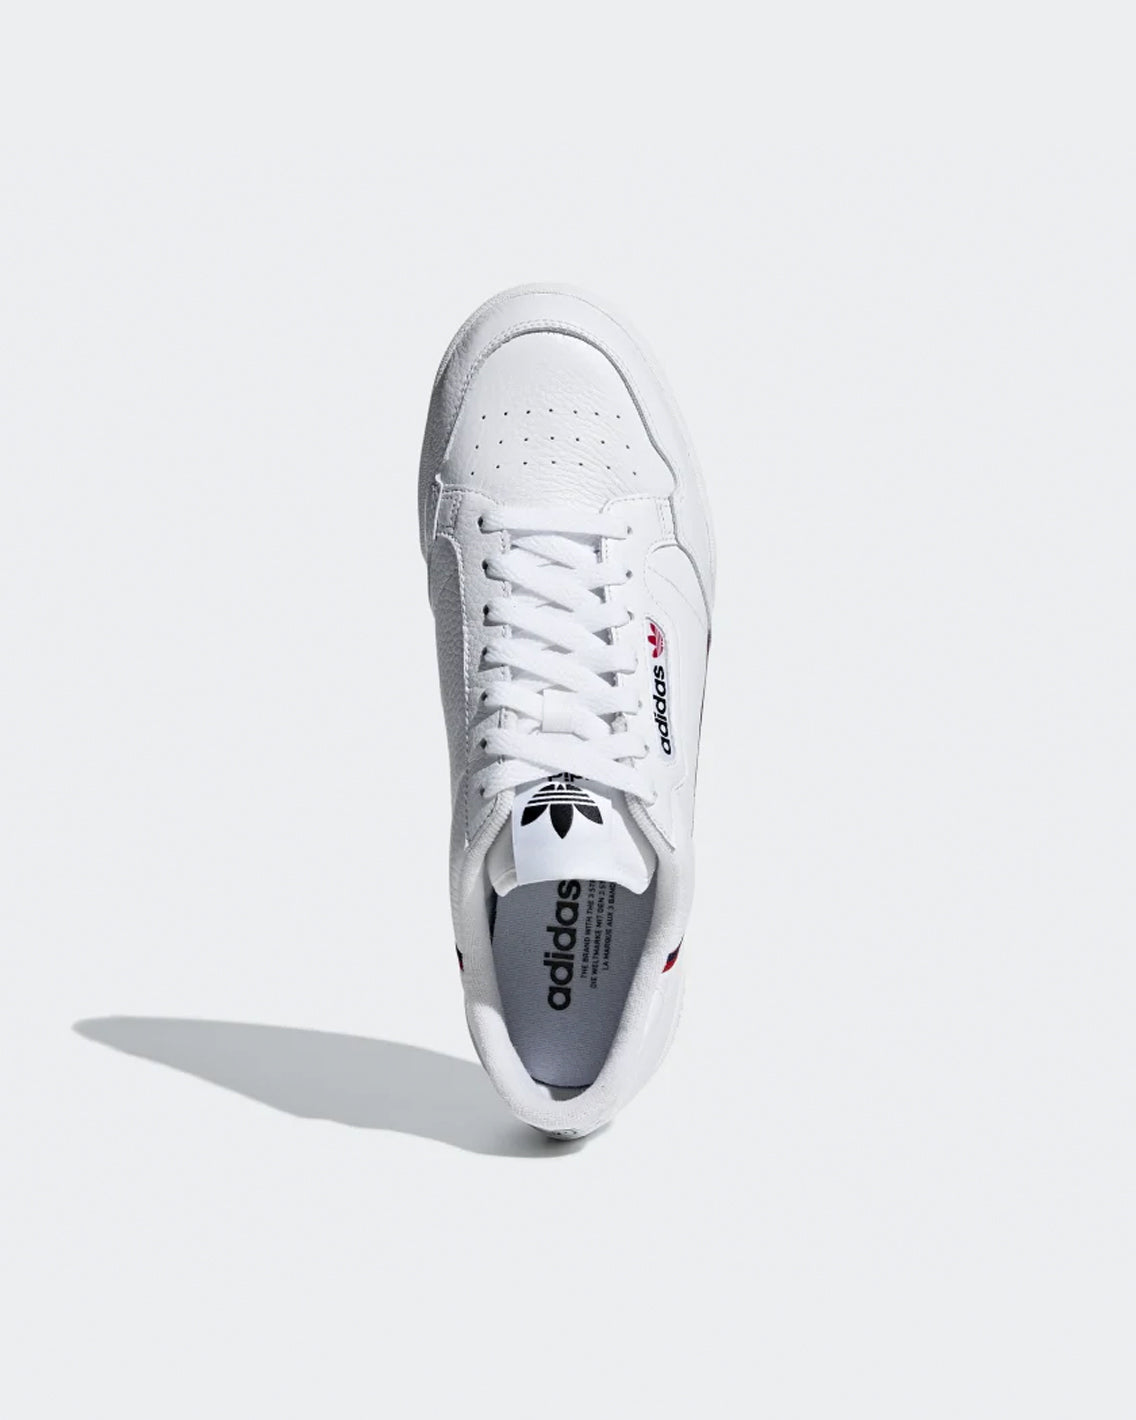 Adidas Originals - Continental 80  - White/Scarlet/Collegiate Navy